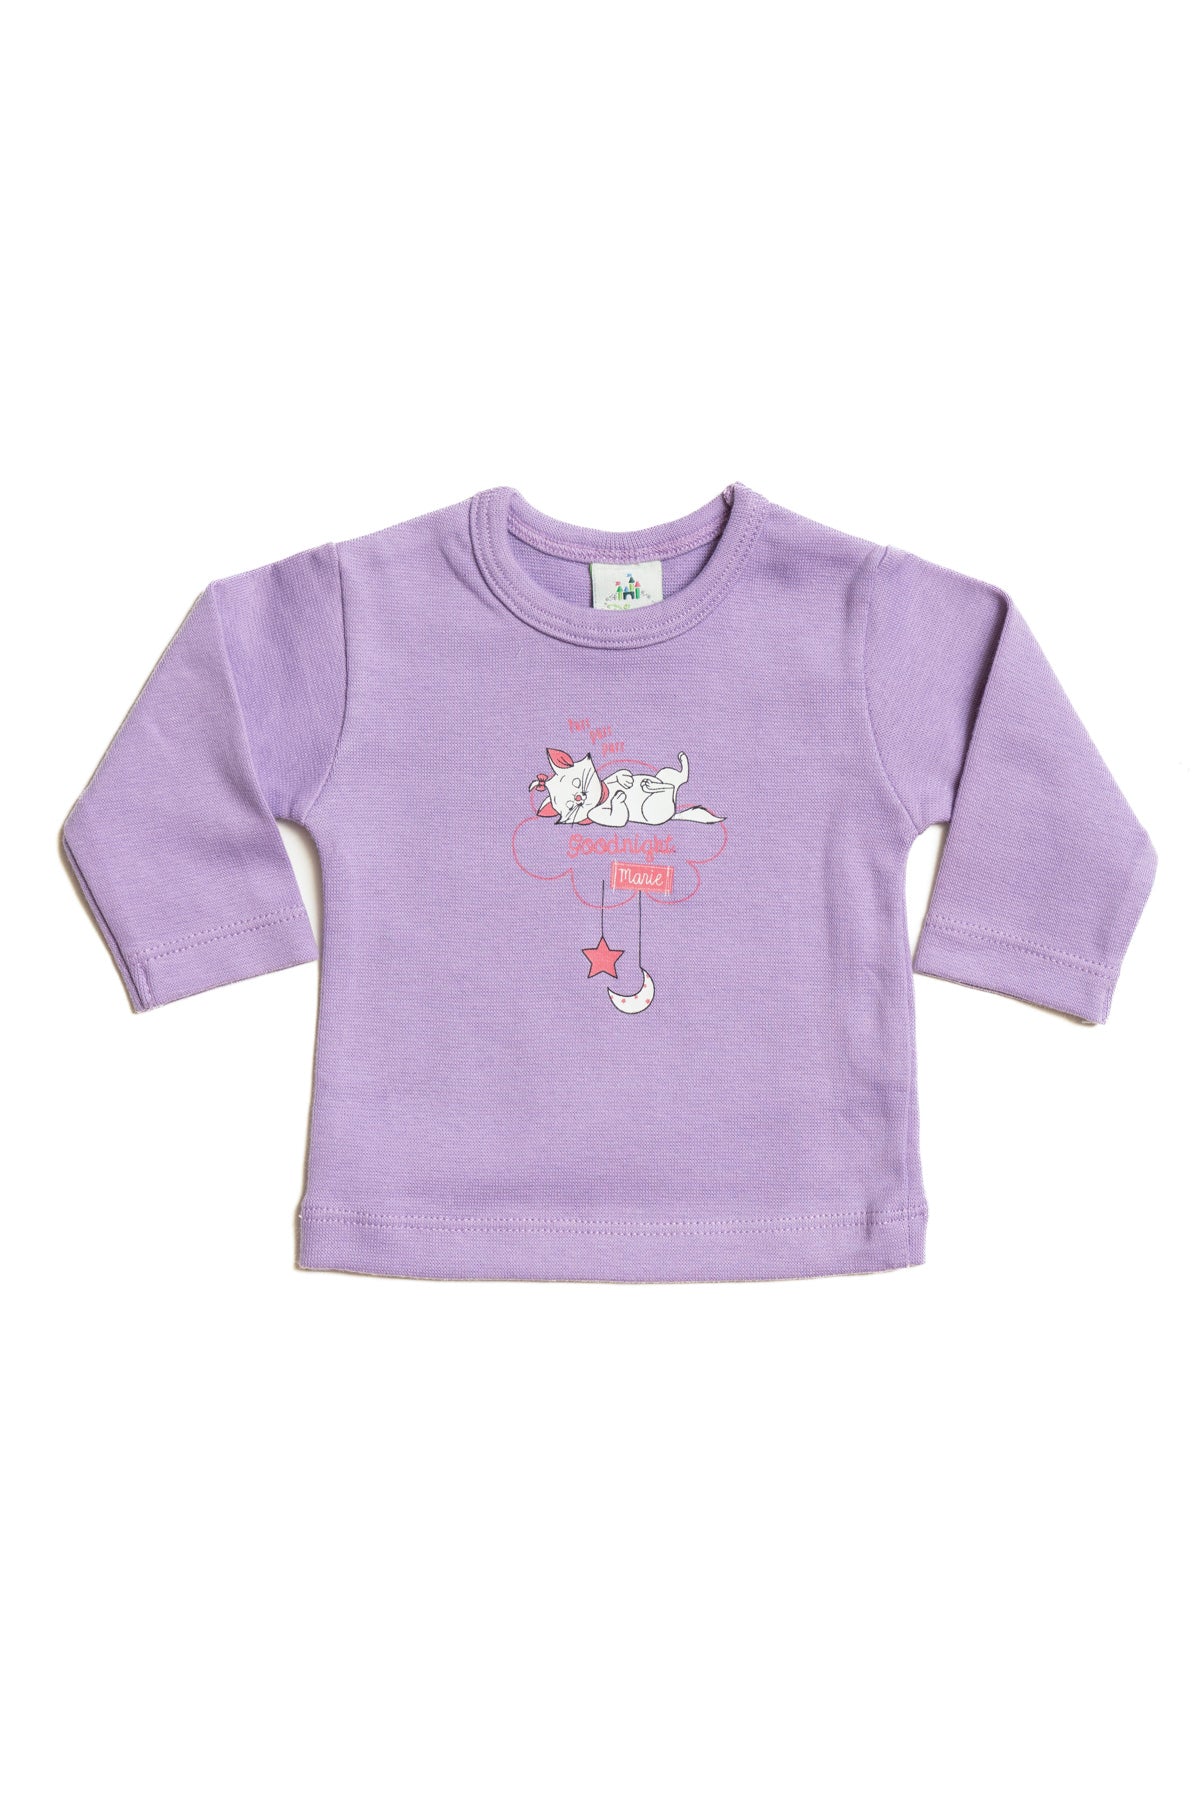 T-Shirt Baby Marie " Good Night " sleeve 4016